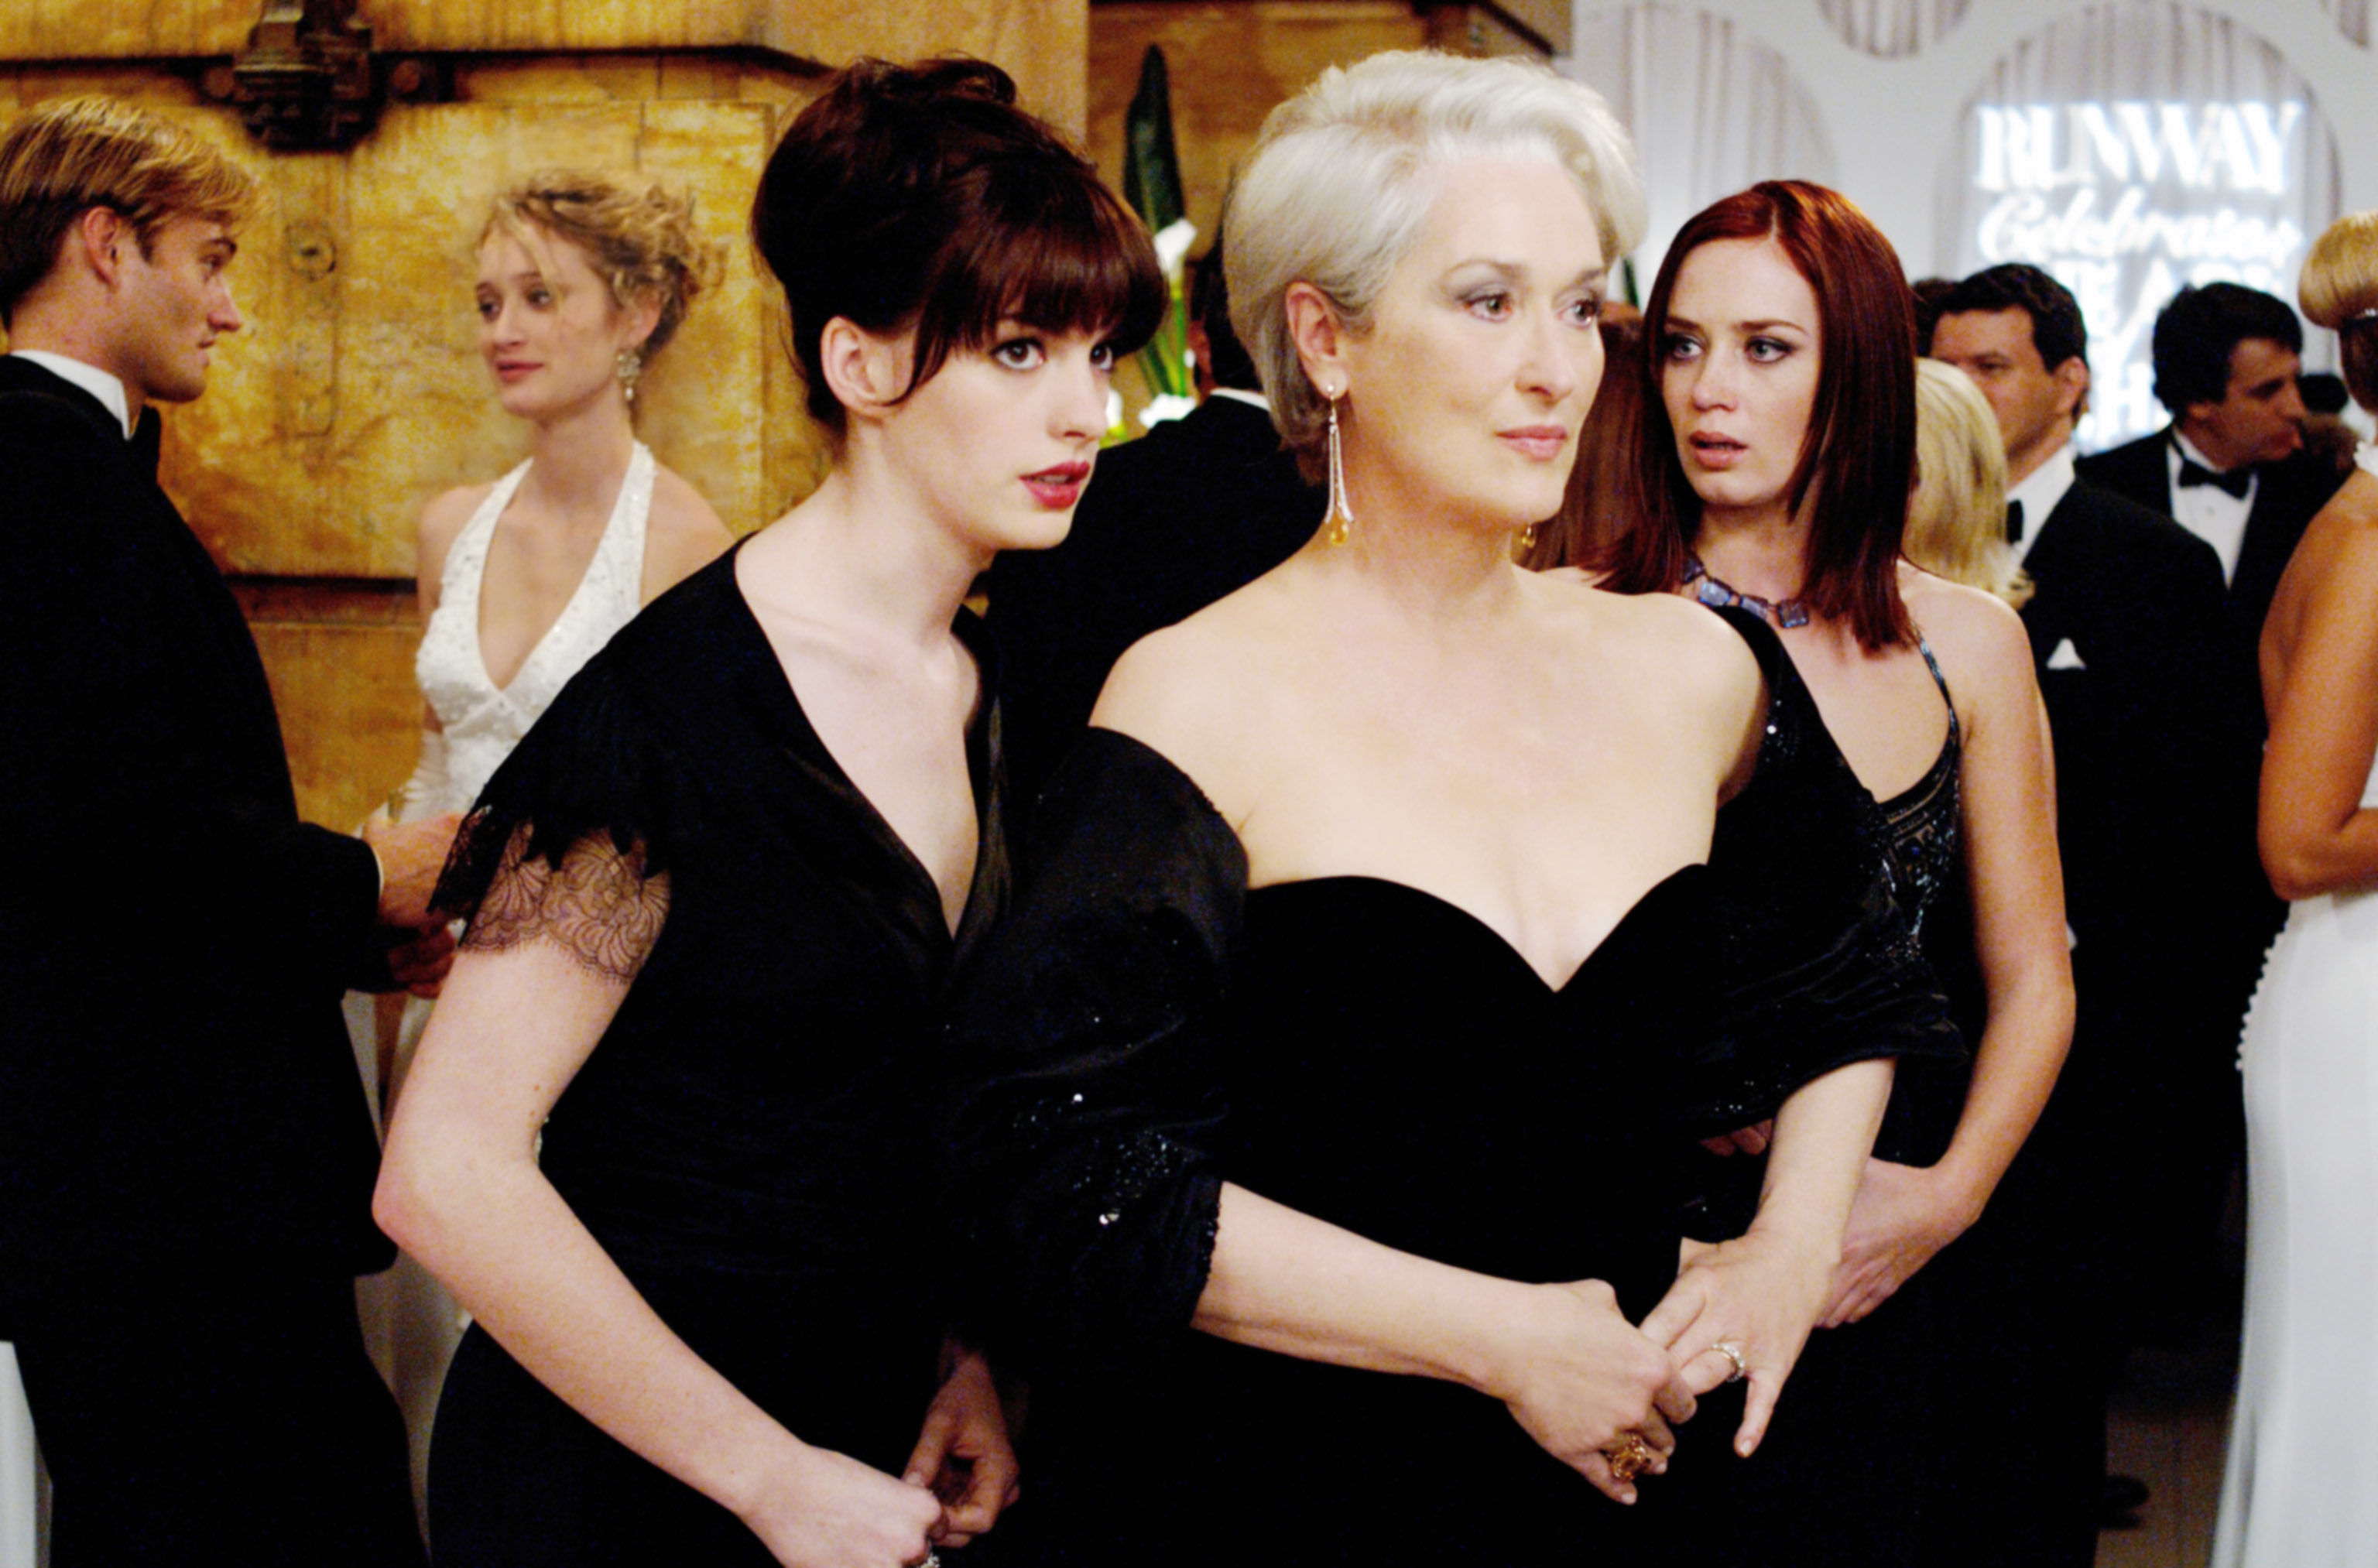 Anne Hathaway and Emily Blunt on each side of Meryl Streep in &#x27;The Devil Wears Prada&#x27;